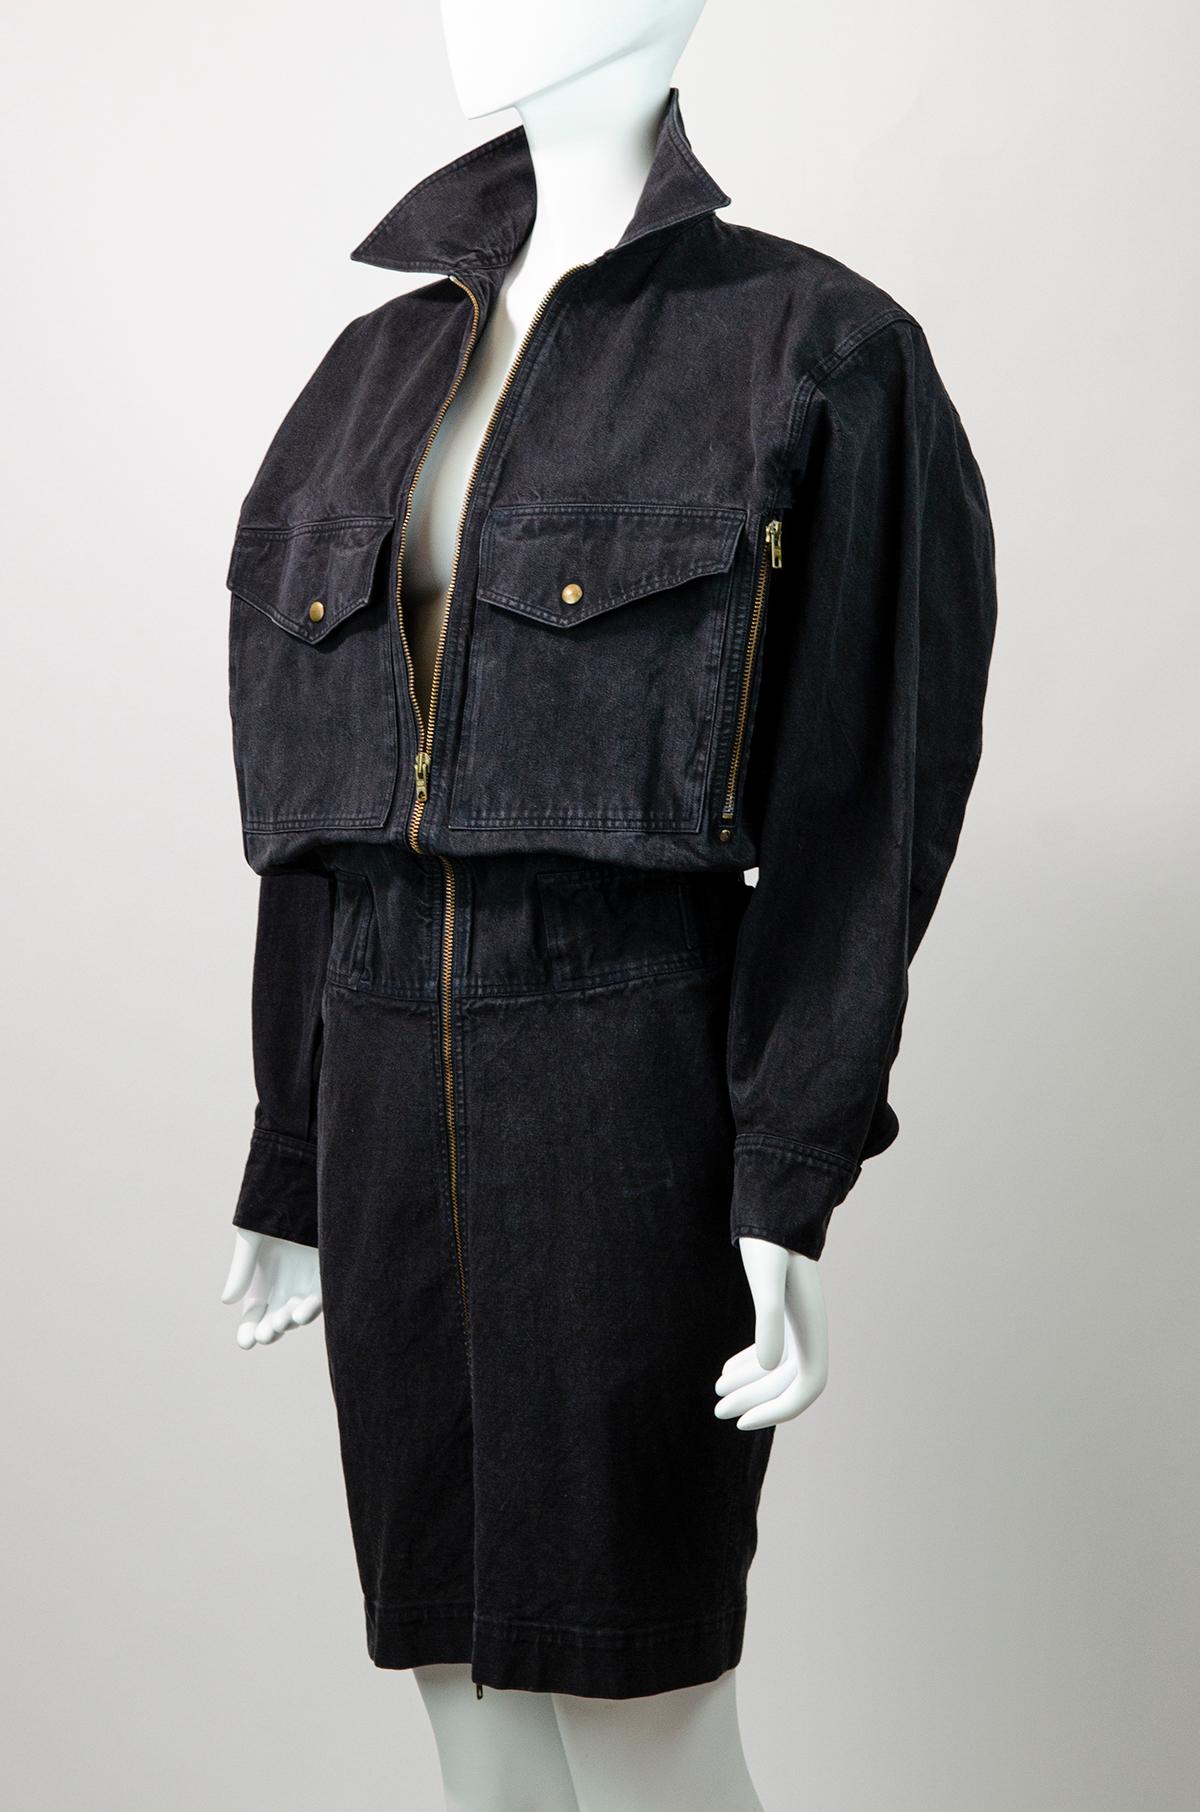 ALAÏA S/S 1986 Vintage Runway Denim Zipper Dress With Pockets 2